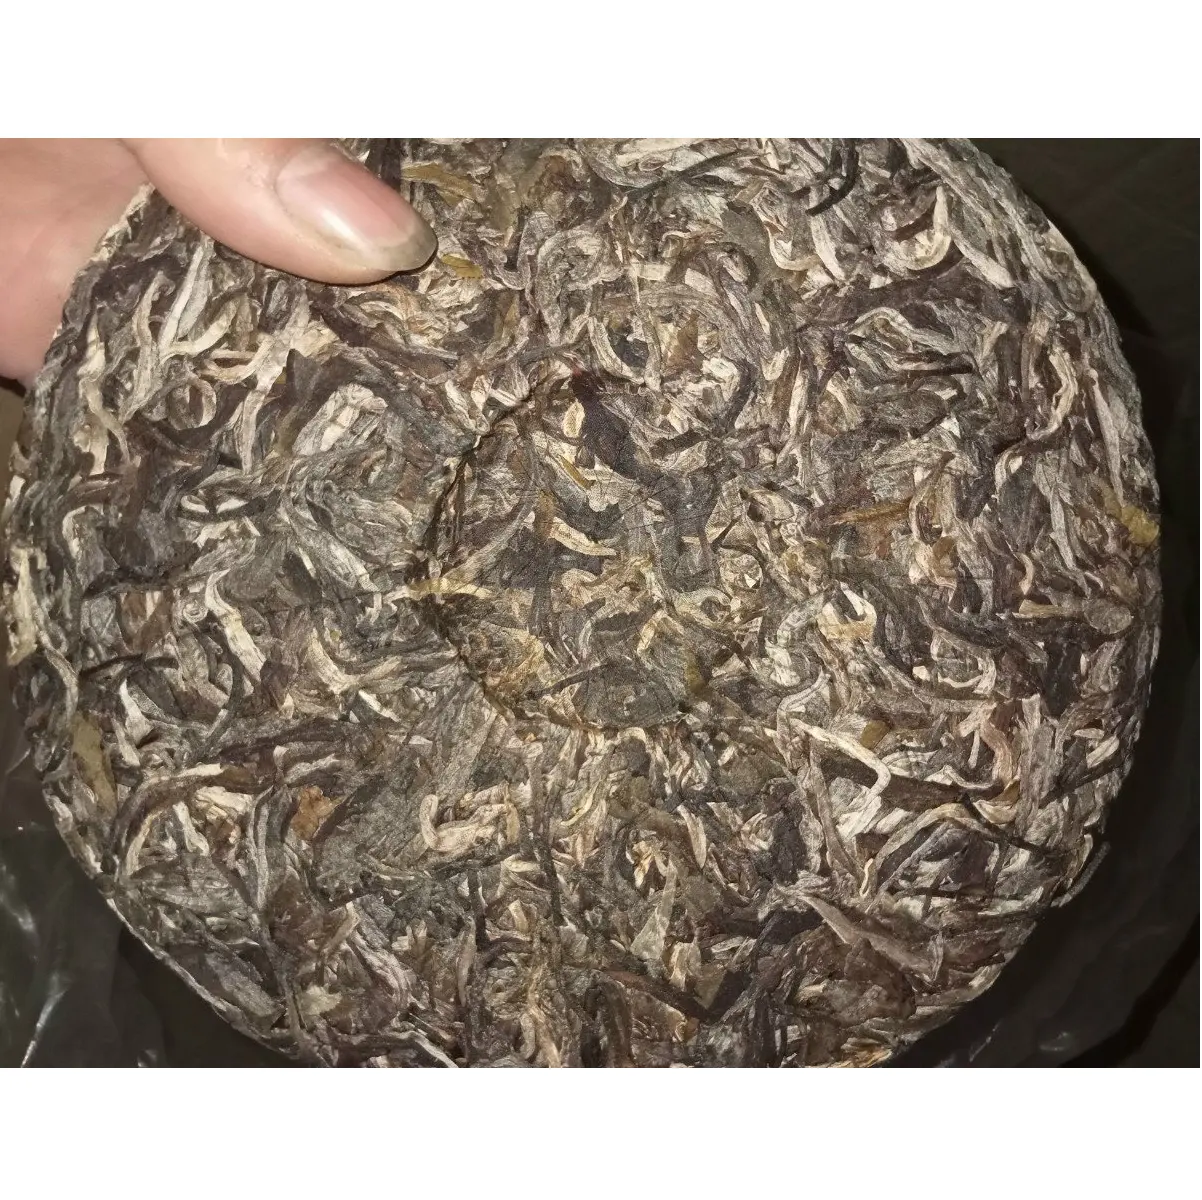 Vietnam Puer Suppliers Fermented Puer Tea Cake Puerh Tea Raw Leaf Dried Tangerine Peel Orange